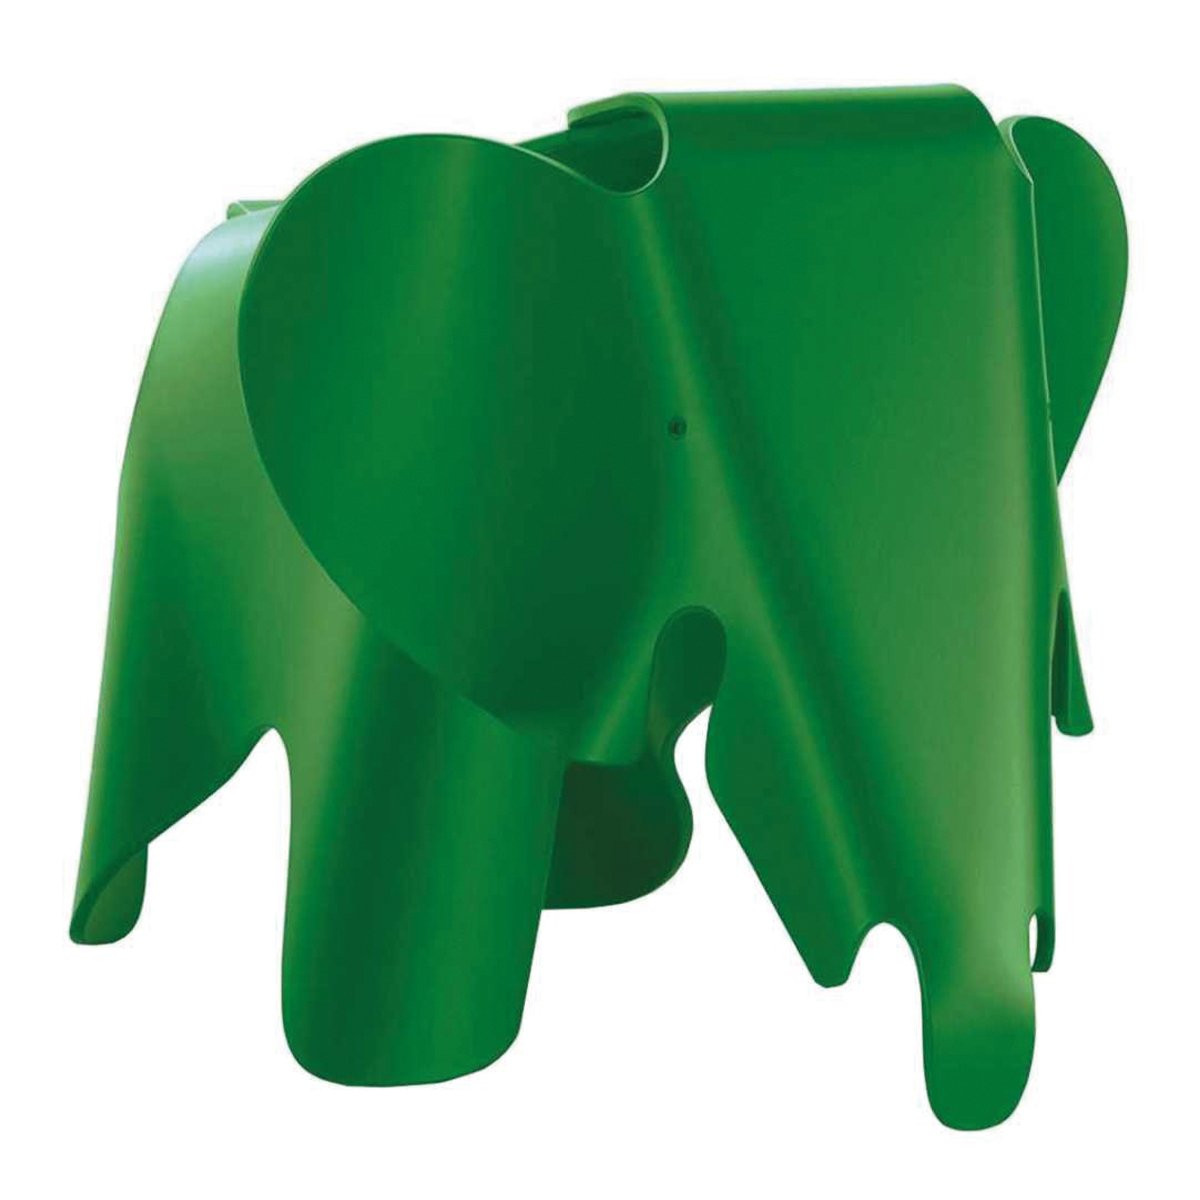 Vitra Eames Elephant - Palm Groen